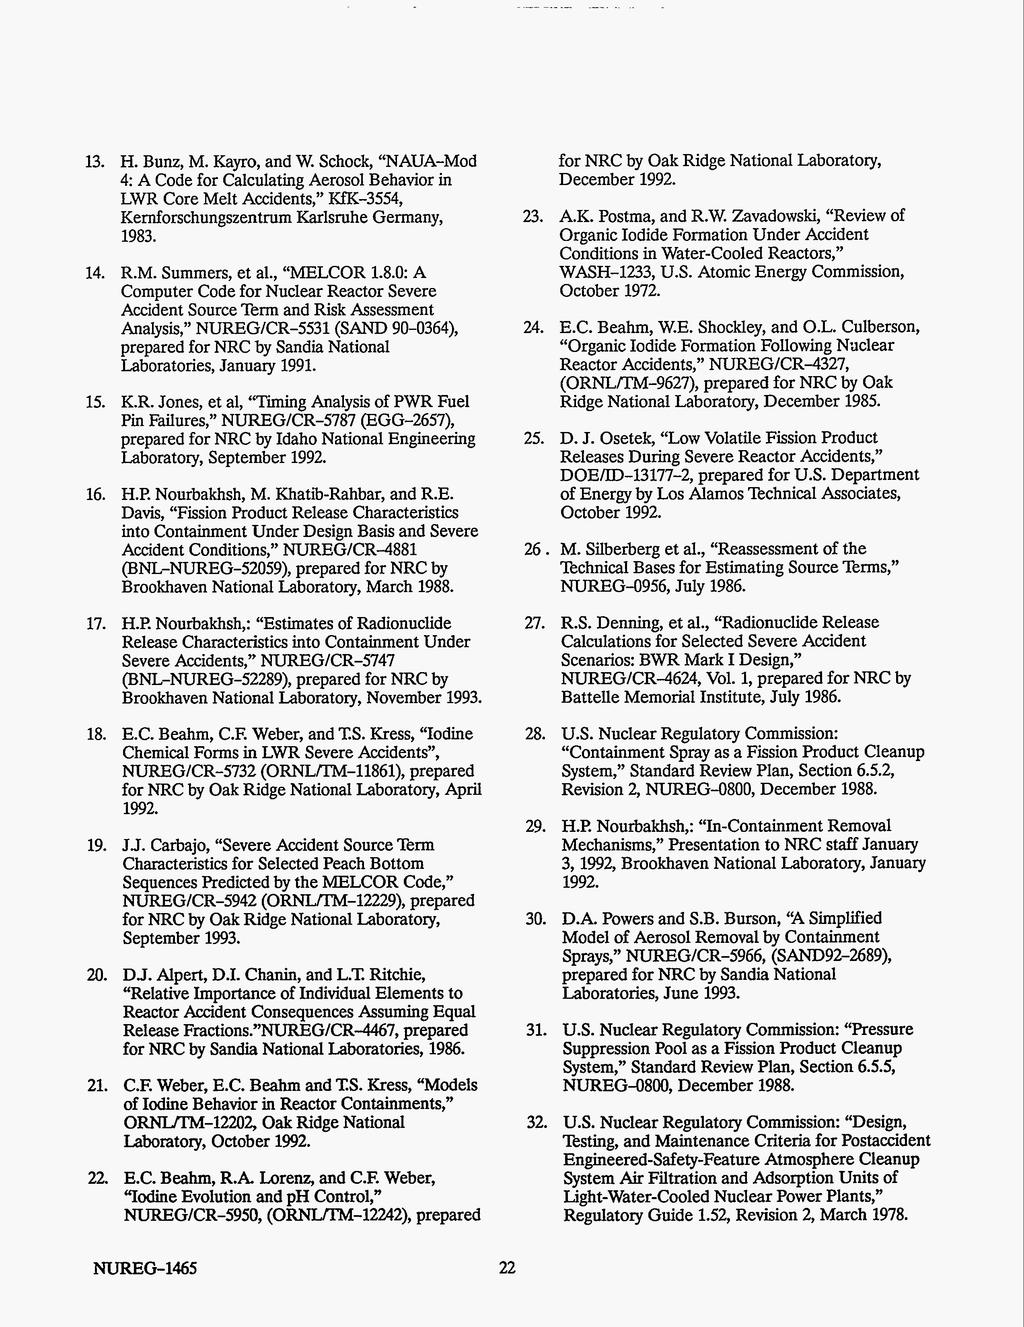 H. Bum, M. Kayro, and W. Schock, NAUA-Mod 4: A Code for Calculating Aerosol Behavior in LWR Core Melt Accidents, KfK-3554, Kernforschungszentrum Karlsruhe Germany, 1983. R.M. Summers, et al.